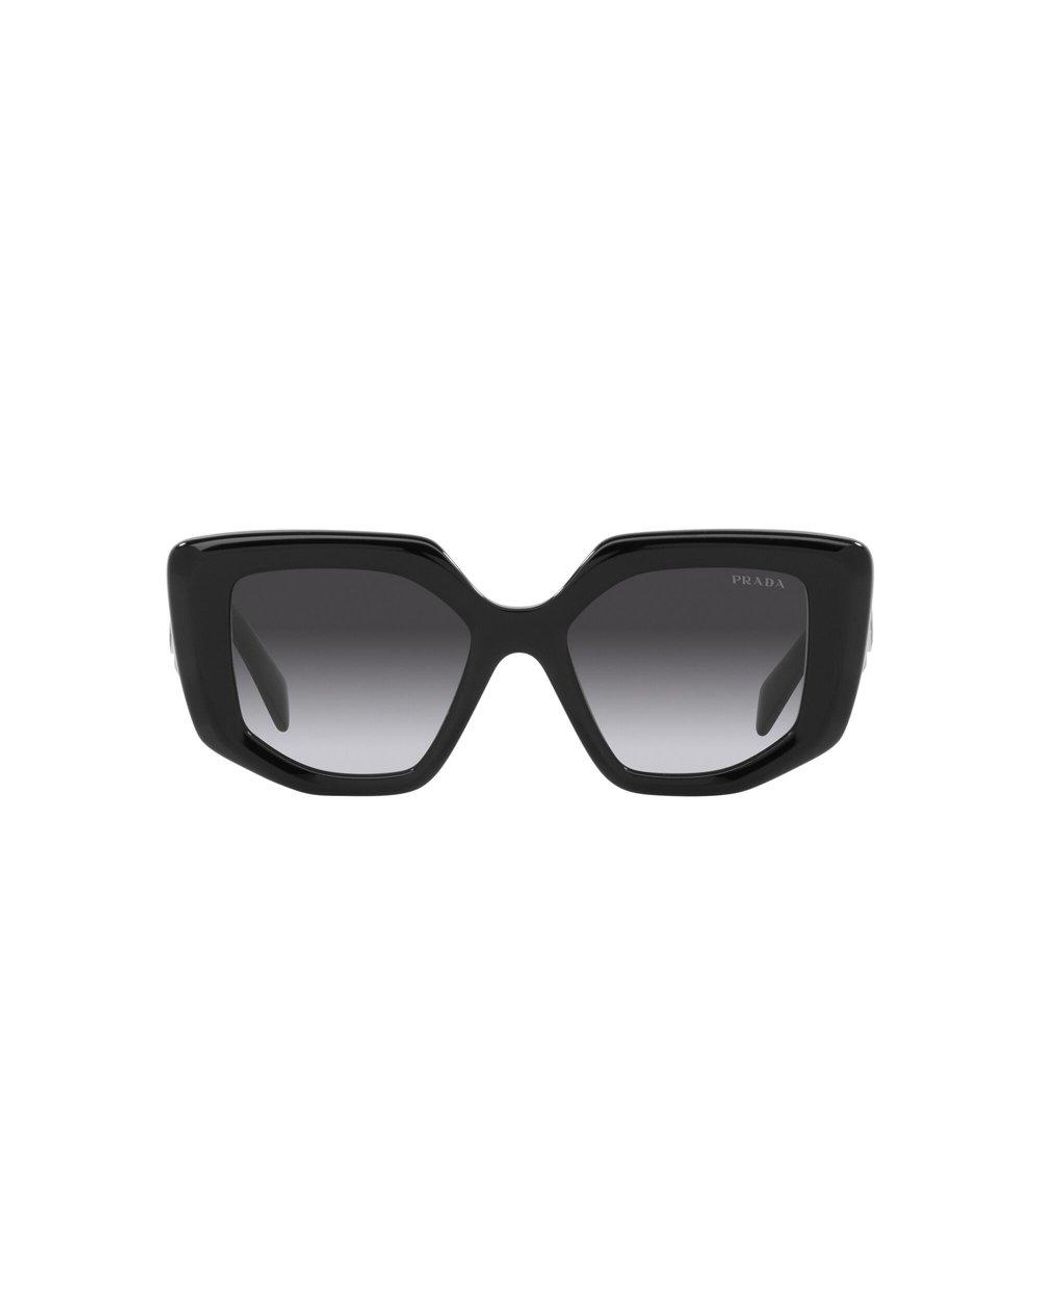 Prada Eyewear in Black | Lyst